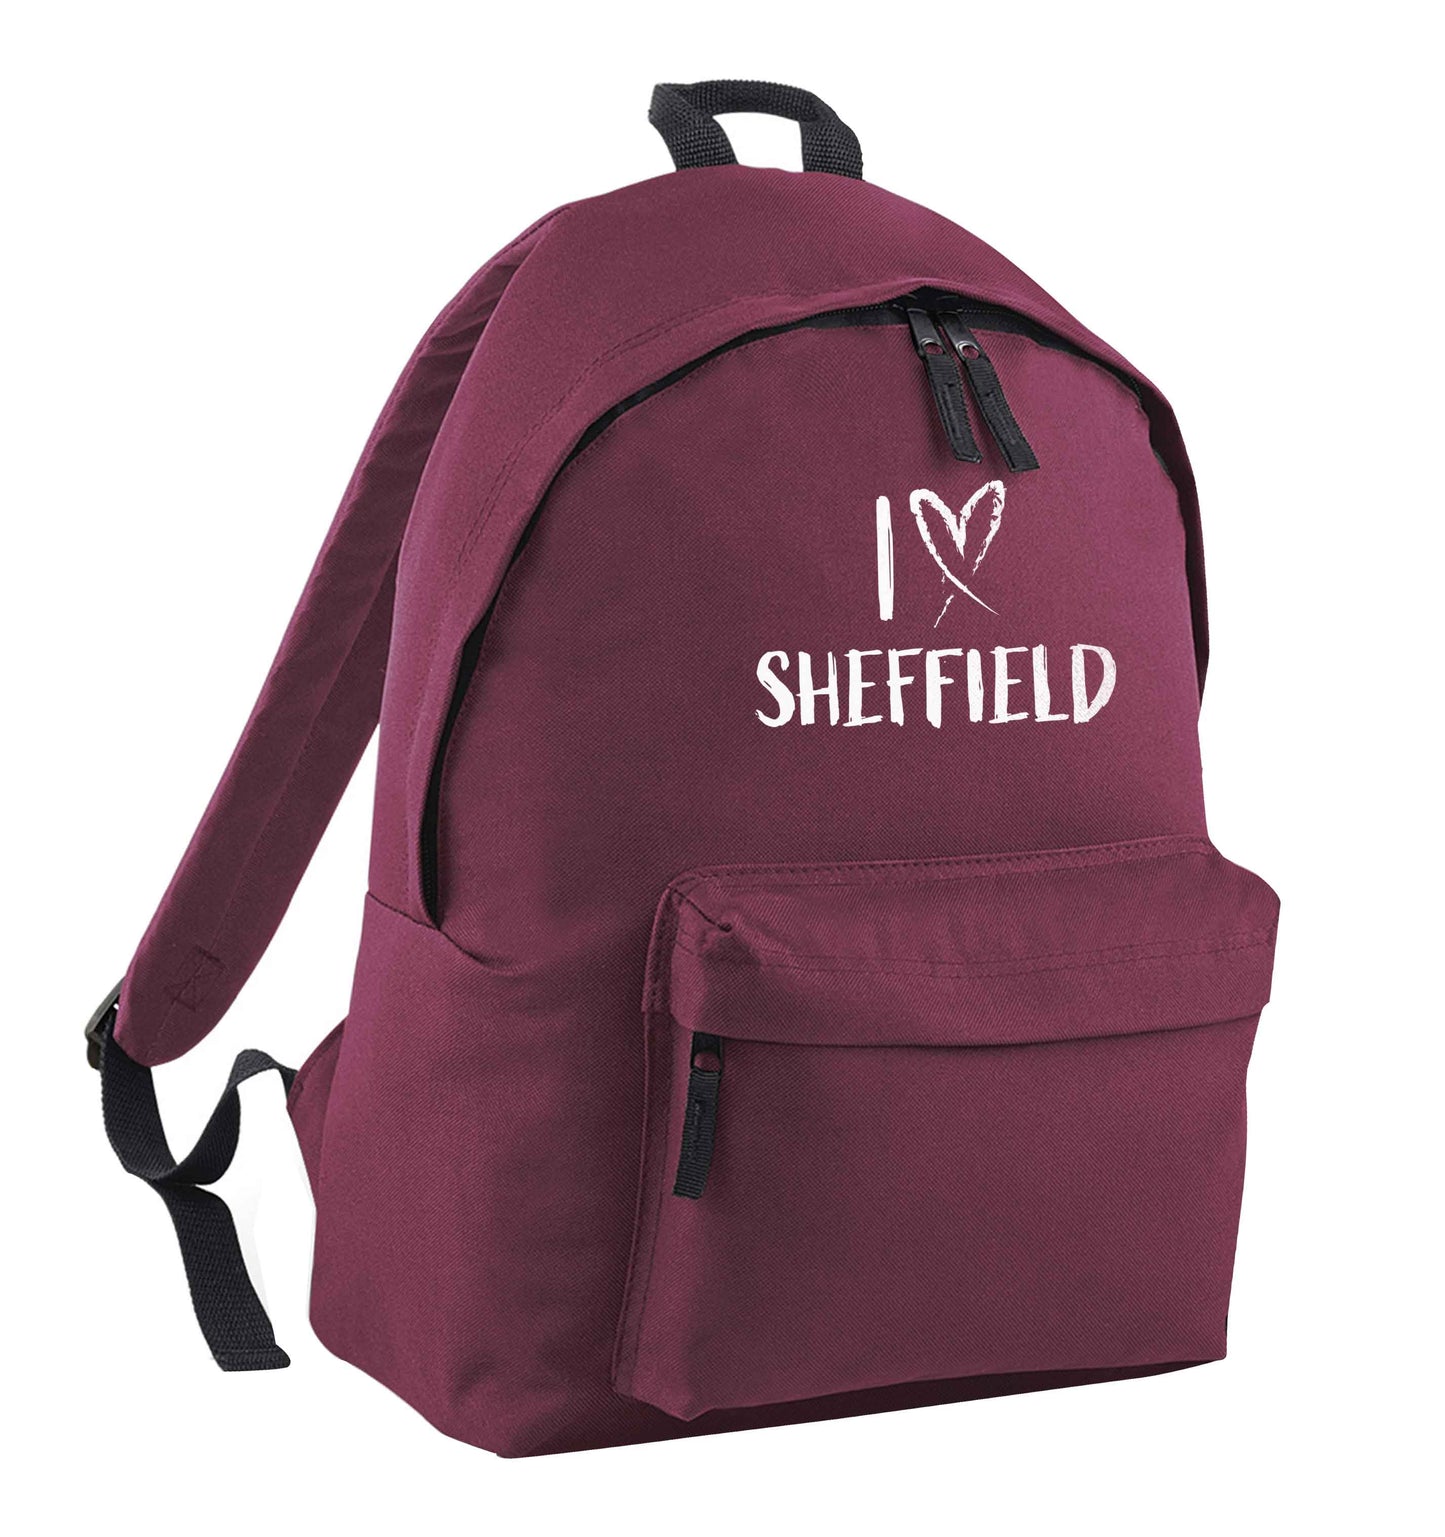 I love Sheffield maroon adults backpack